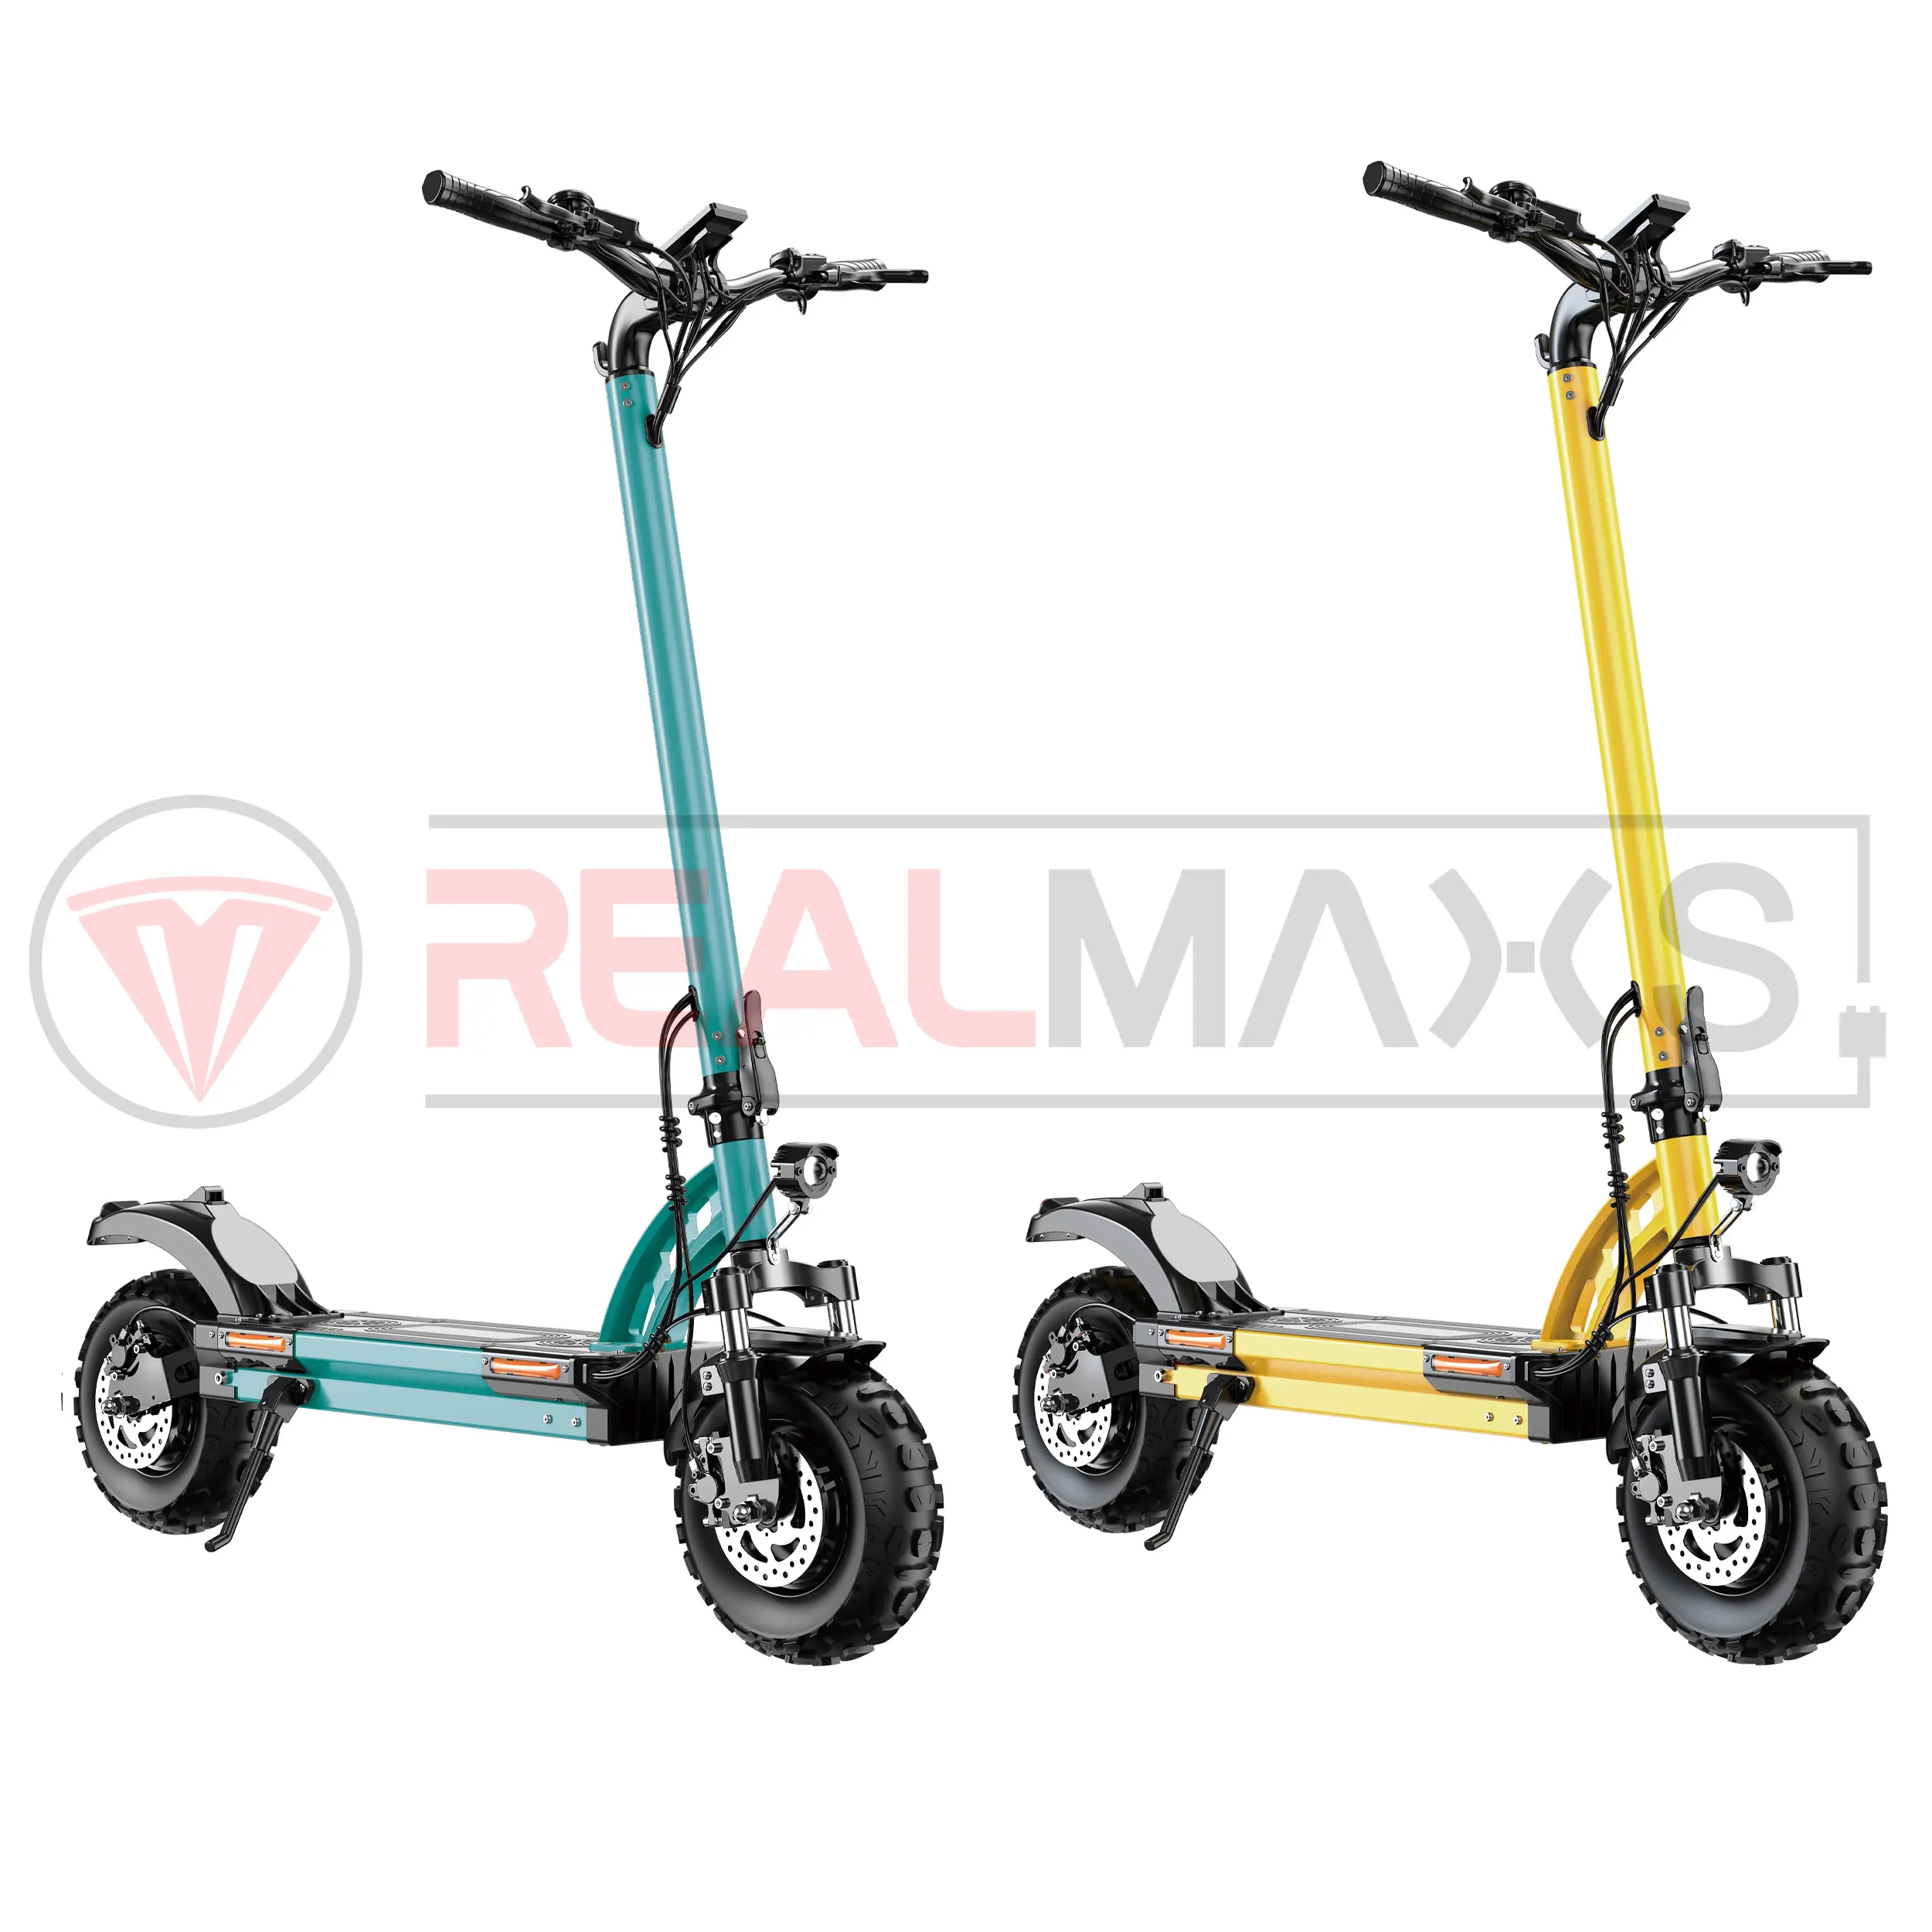 RealmaxS משלוח מהיר קטנועי רגל קטנוע חשמלי חדש קטנוע חשמלי מחיר הודו עם מחיר עם מרחק ארוך